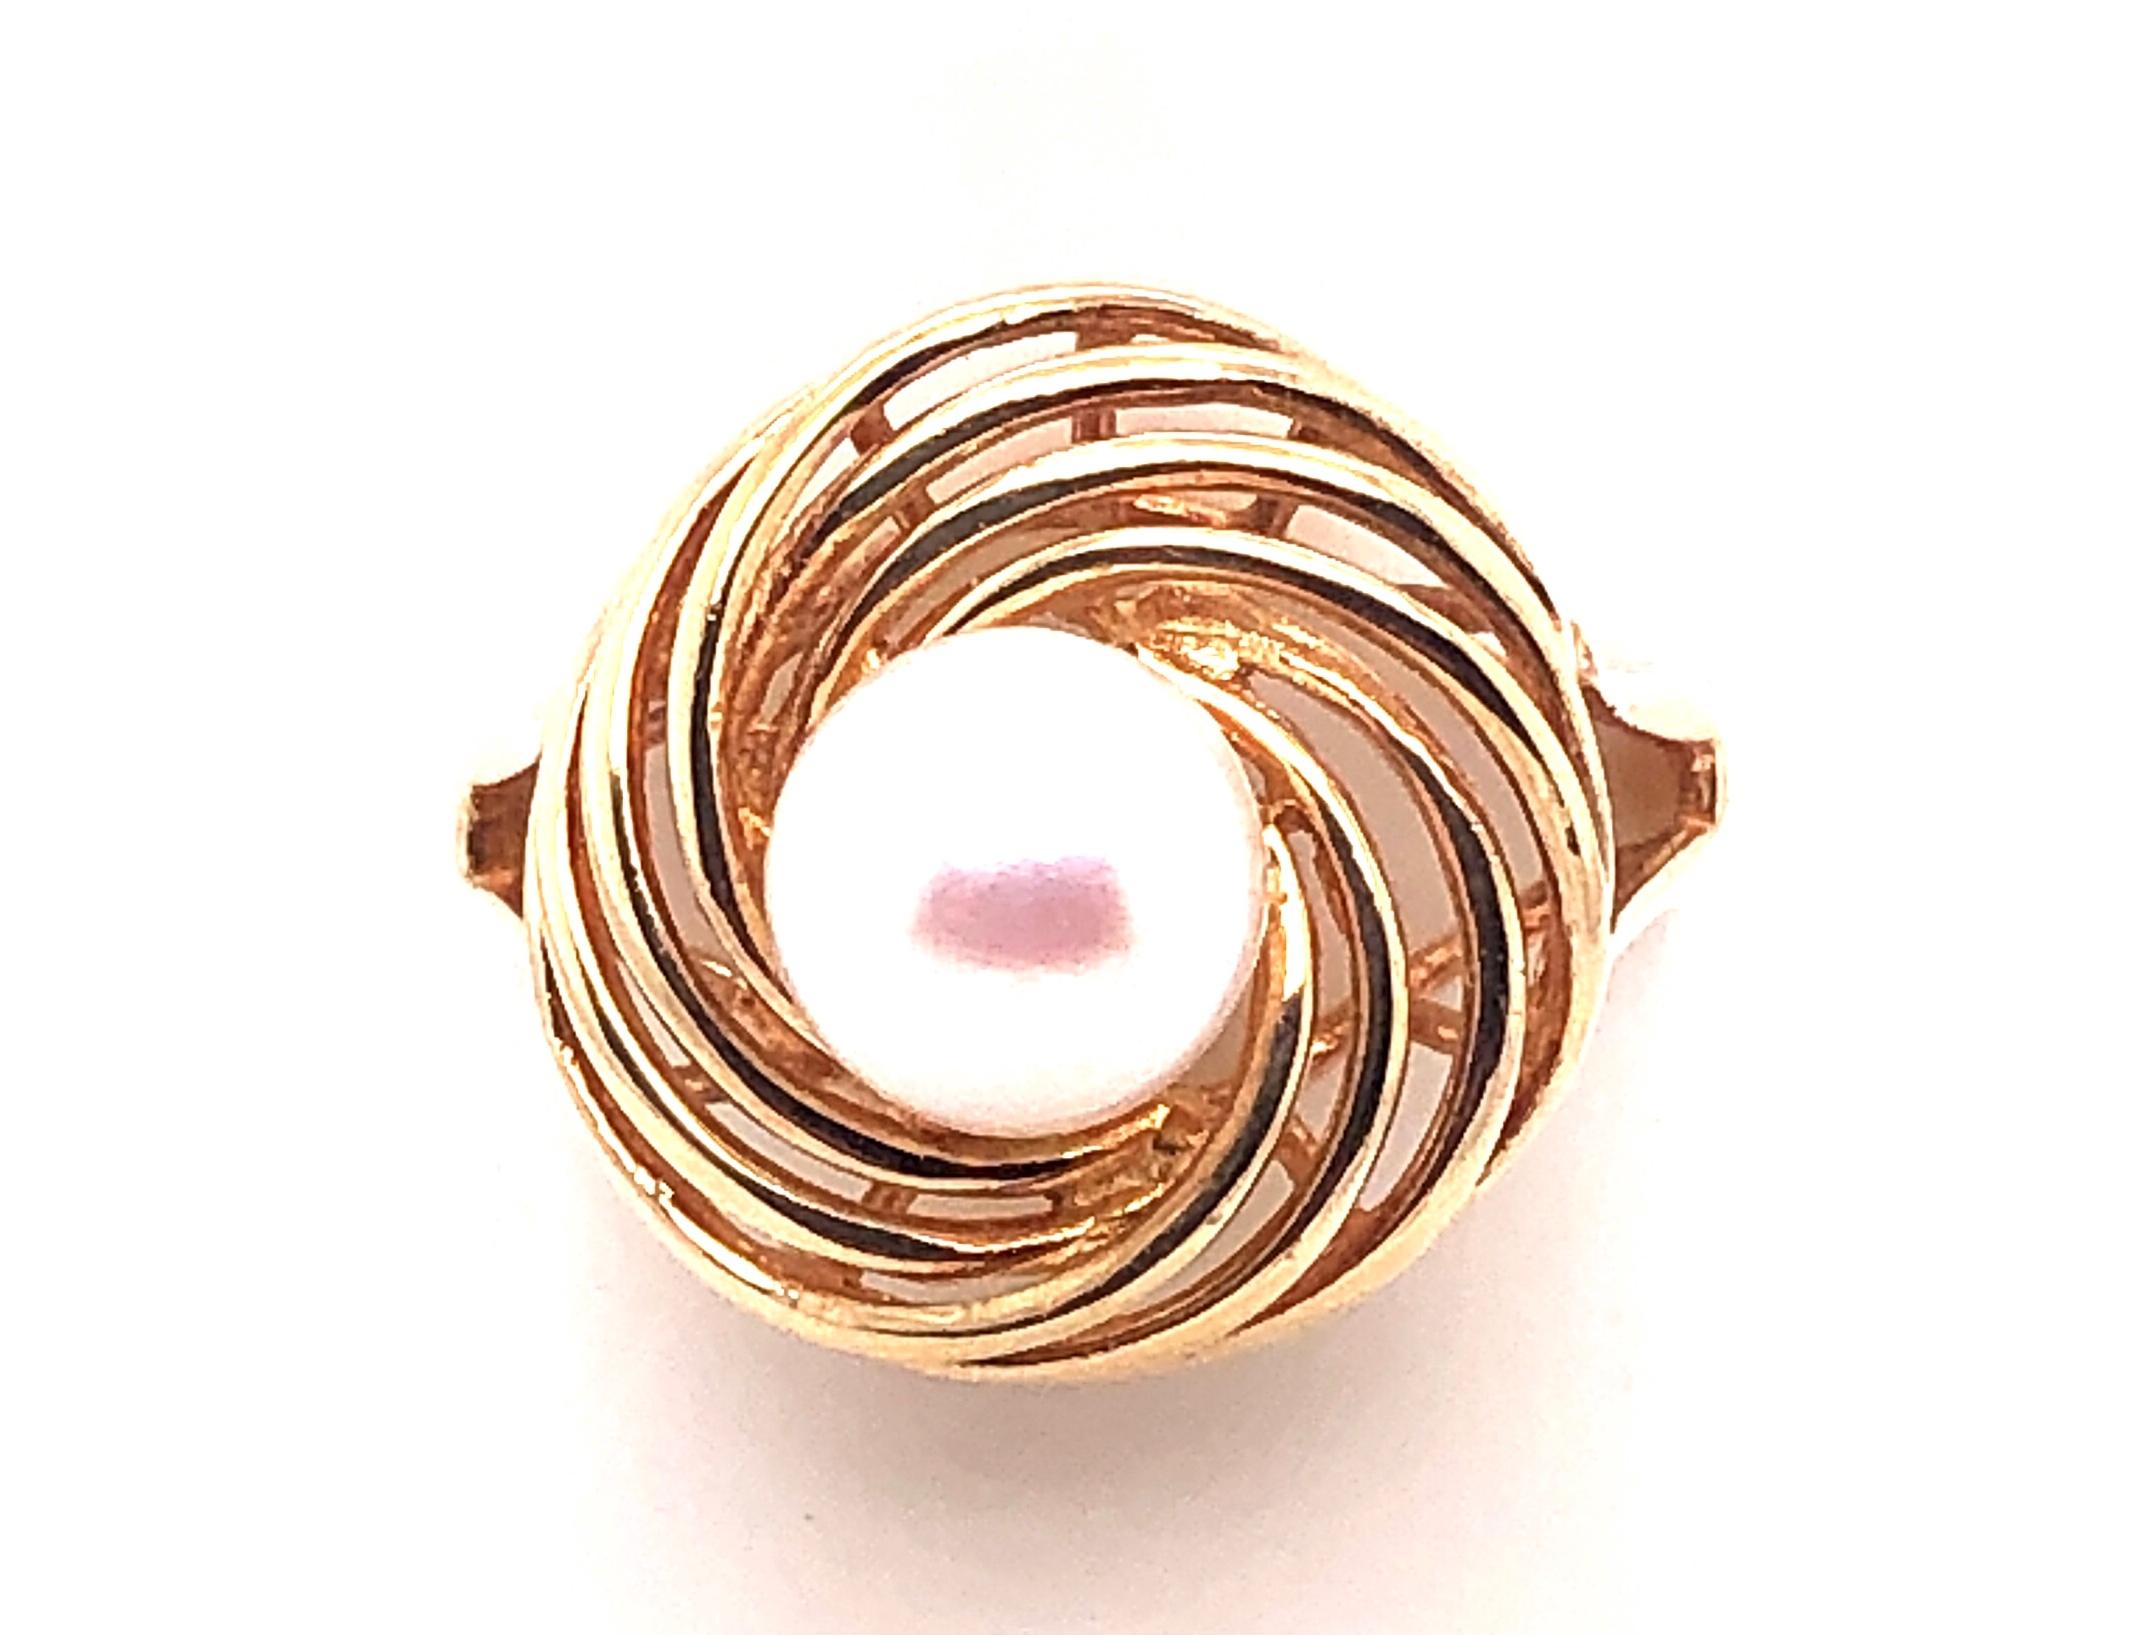 14 Karat Yellow Gold Swirl Pearl Ring.
Size 7
3.5 grams total weight.
16mm ring swirl diameter
6.73 mm pearl size
Stamped 14K 585